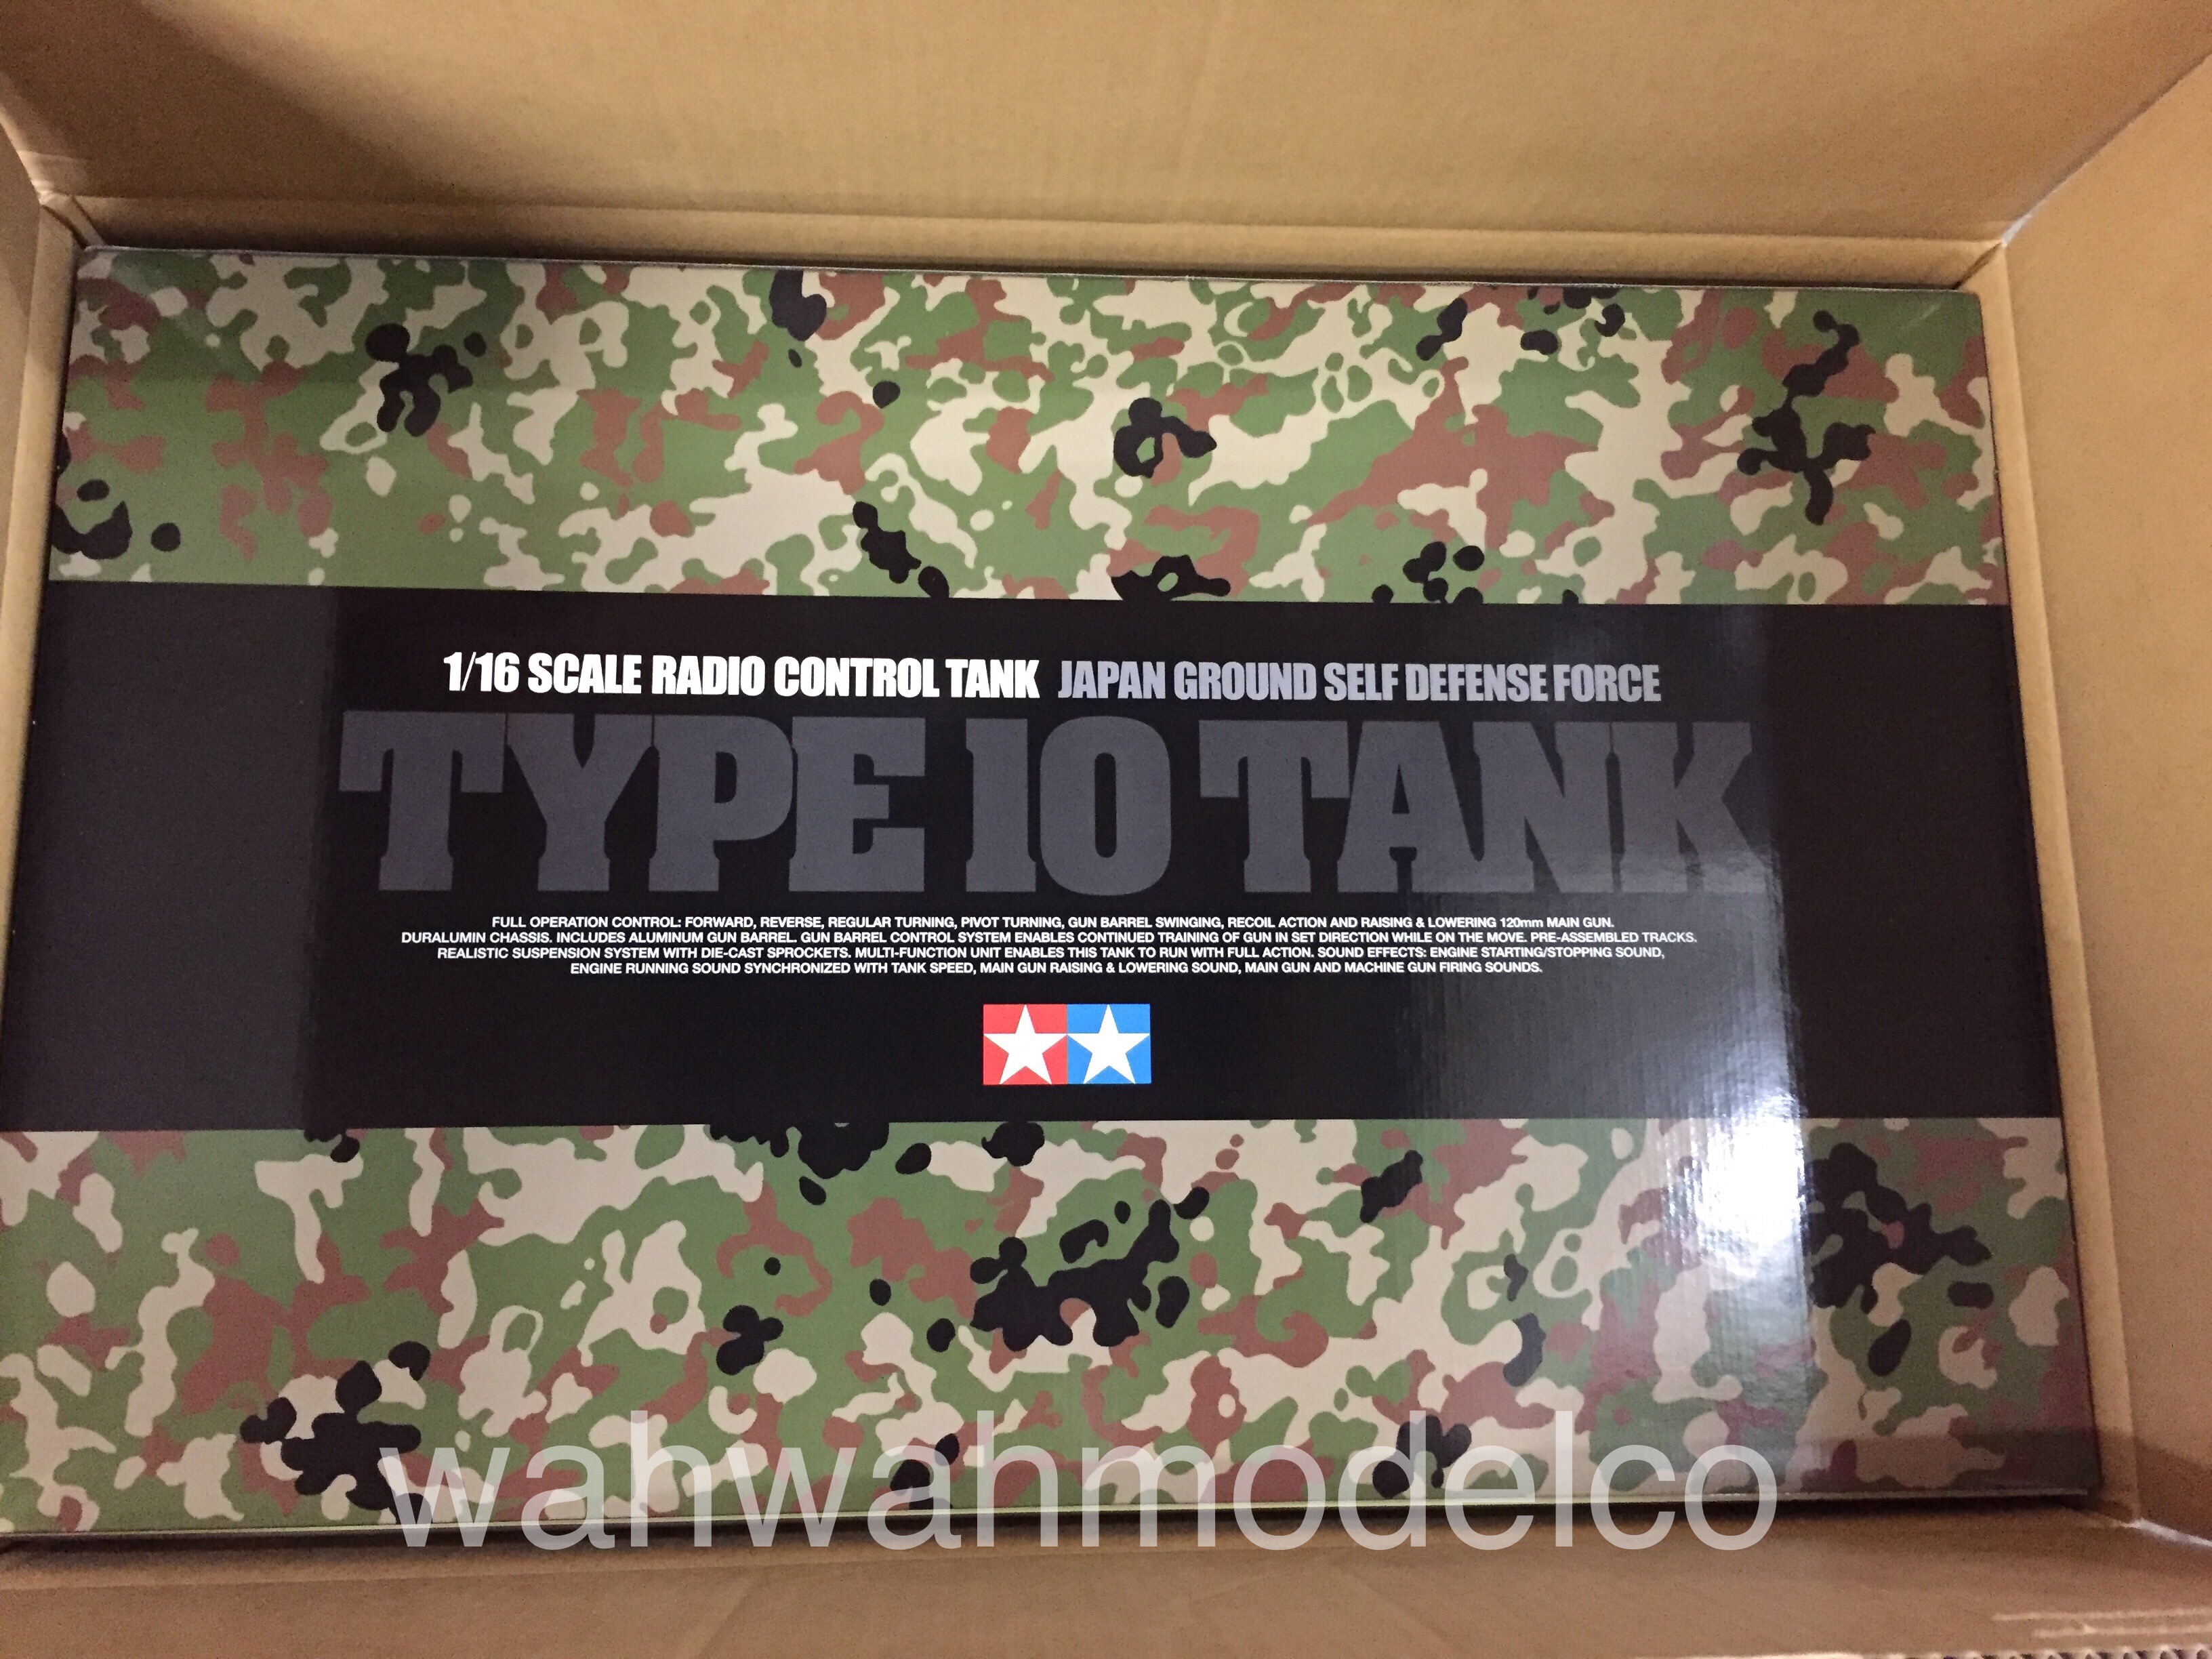 Full Option Kit NEW IN BOX Tamiya # 56037 1/16 RC JGSDF Type 10 Tank 